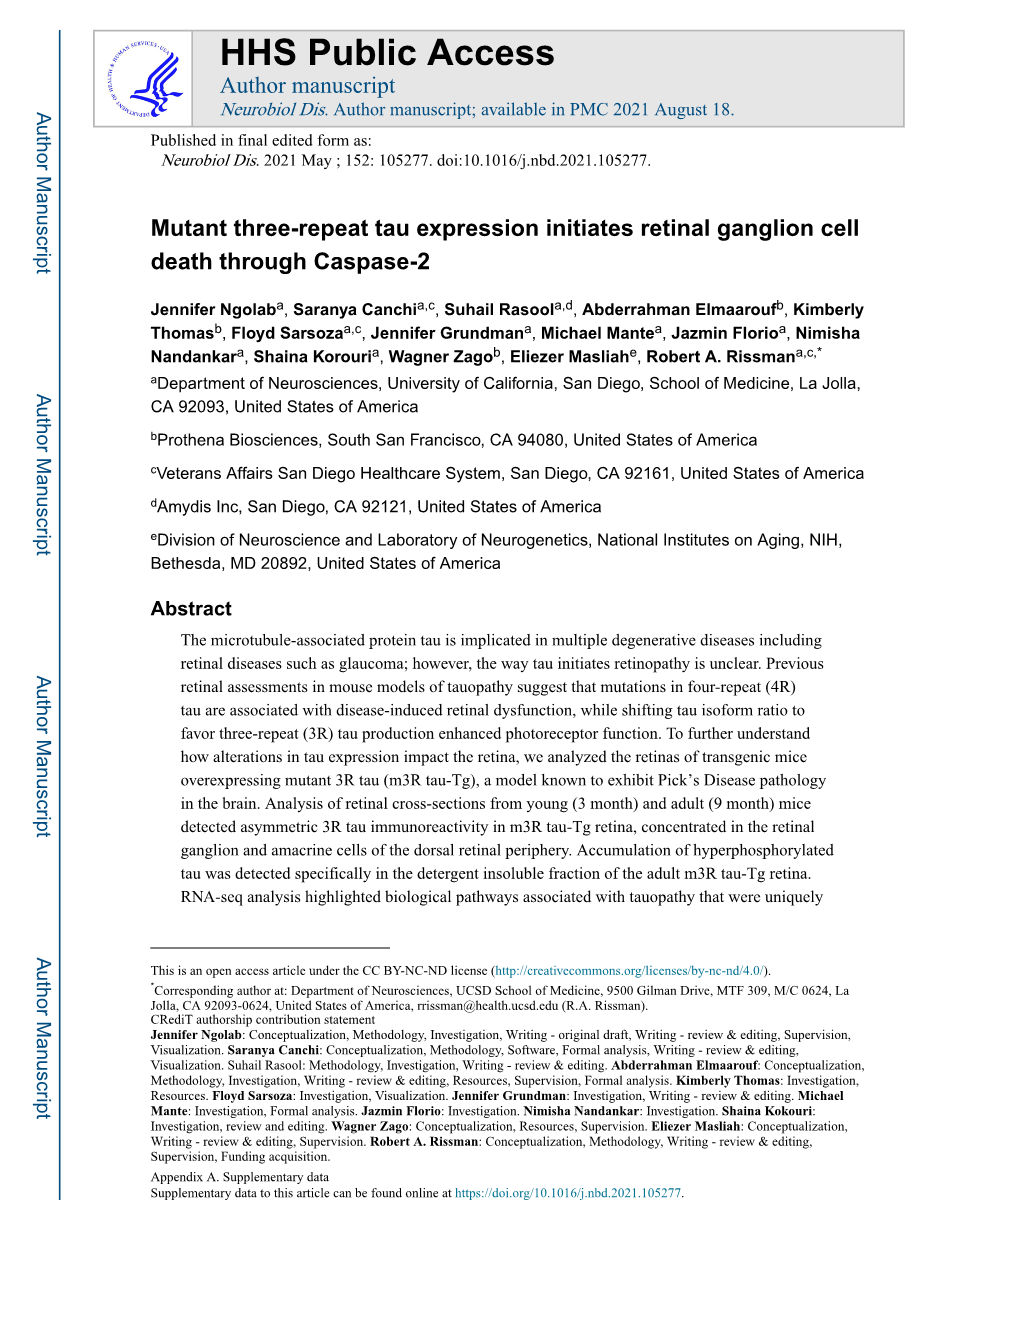 Mutant Three-Repeat Tau Expression Initiates Retinal Ganglion Cell Death Through Caspase-2